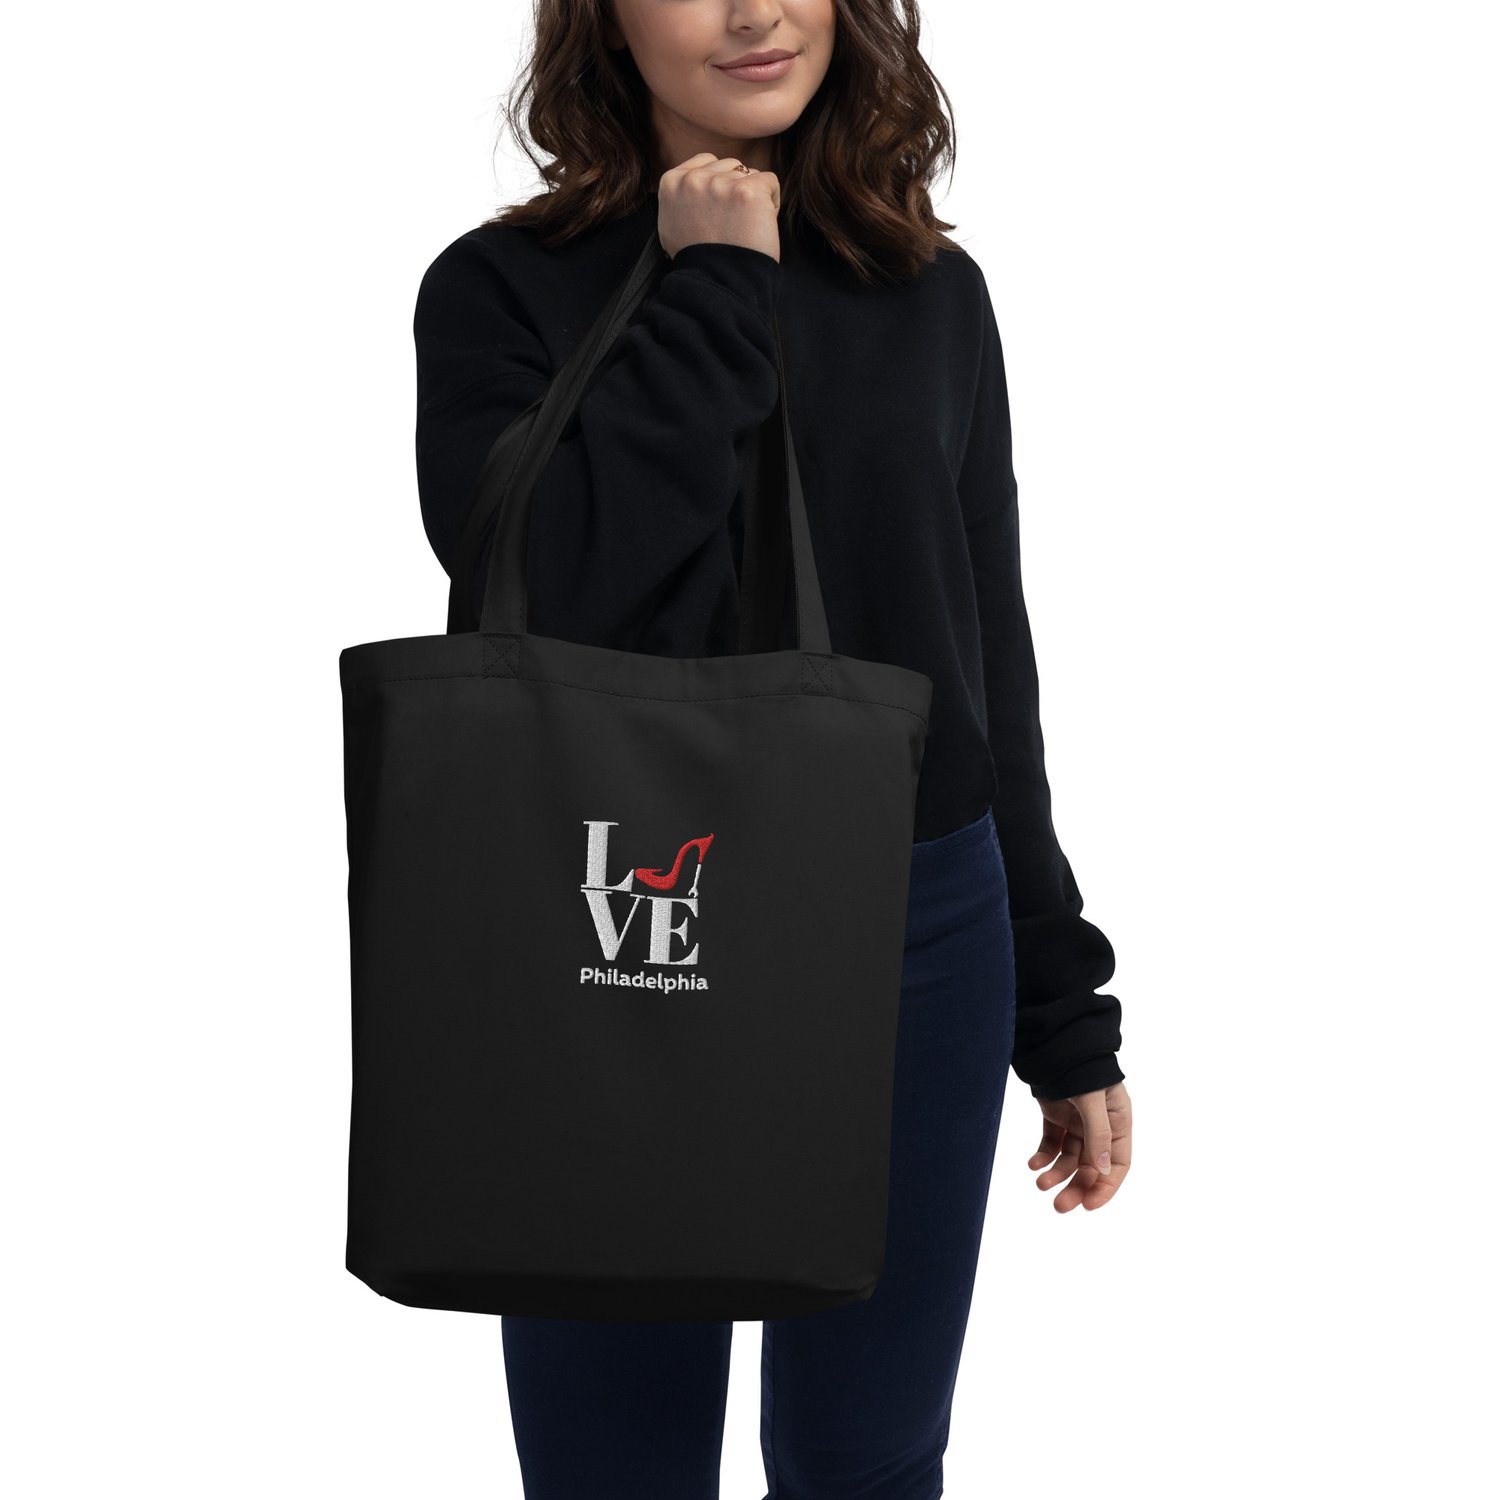 Victoria's Secret: Black Printed Tote Bag | Silkroll